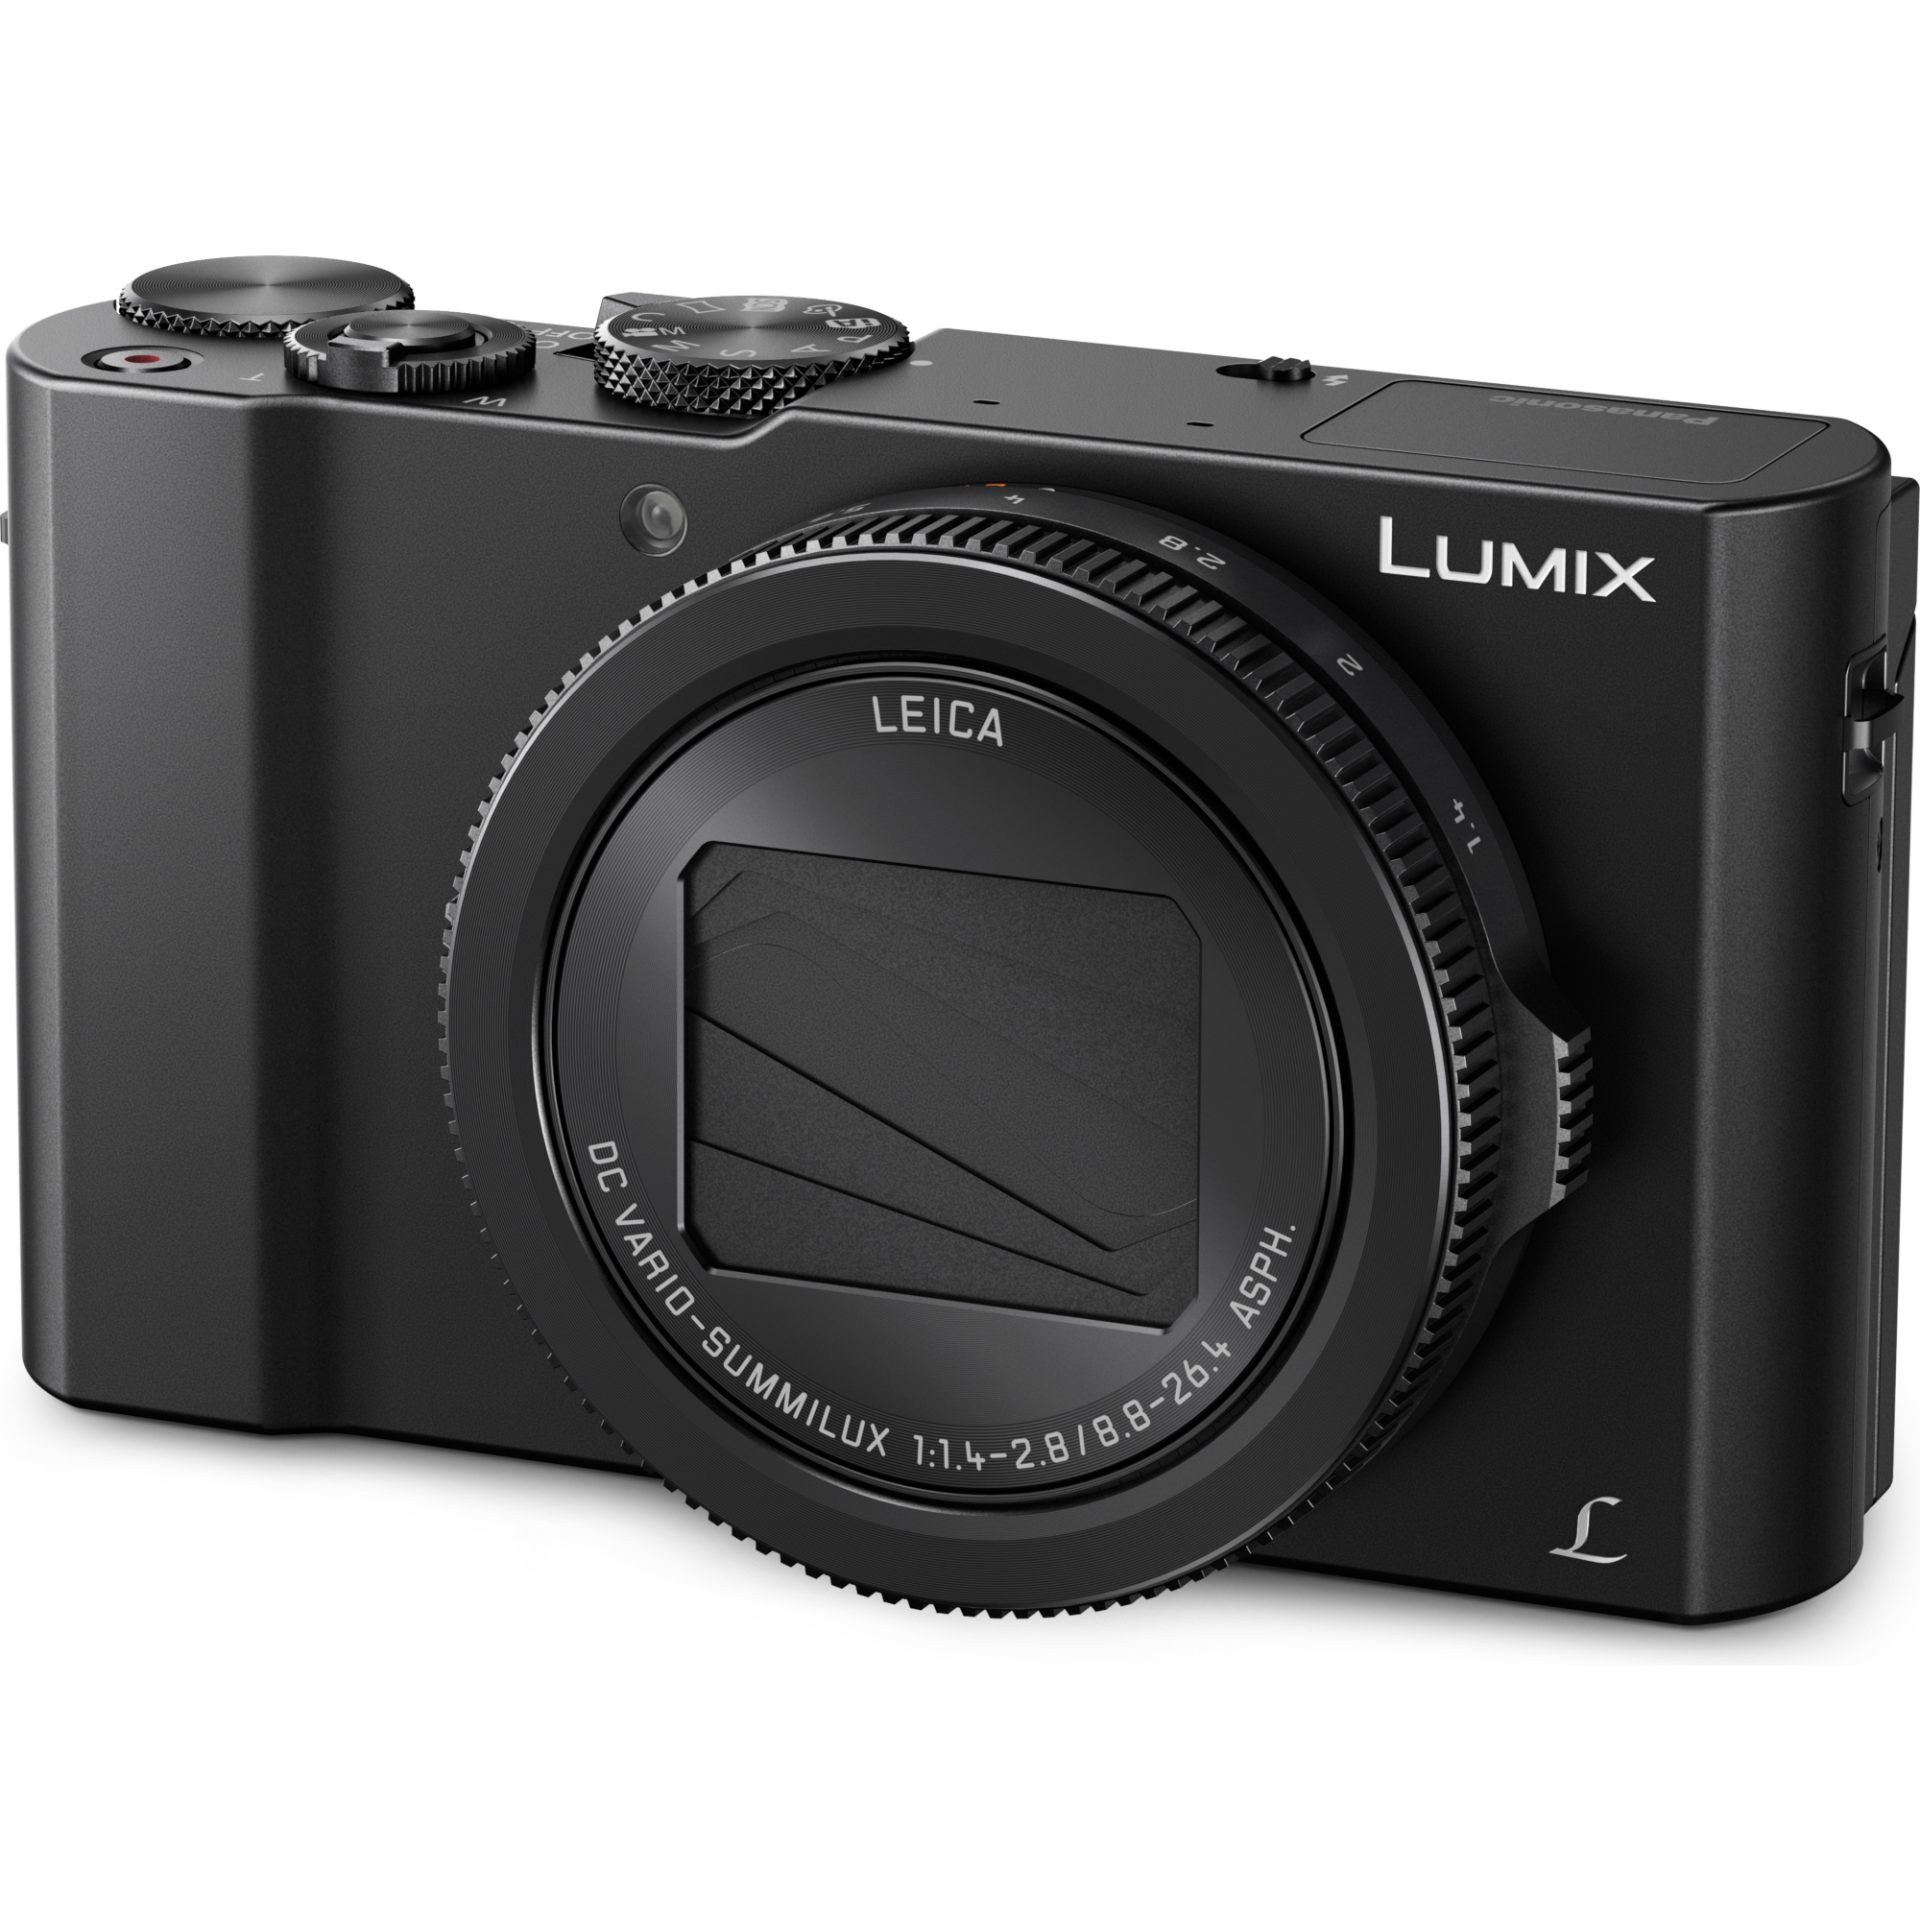 Panasonic DMC-LX15 Lumix kompaktní fotoaparát s OBJEKTIVEM LEICA DC VARIO-SUMMILUX 24-72mm, F1.4-2.8 (1-palcový MOS senzor 20.1MP, 4K, Post Focus), če